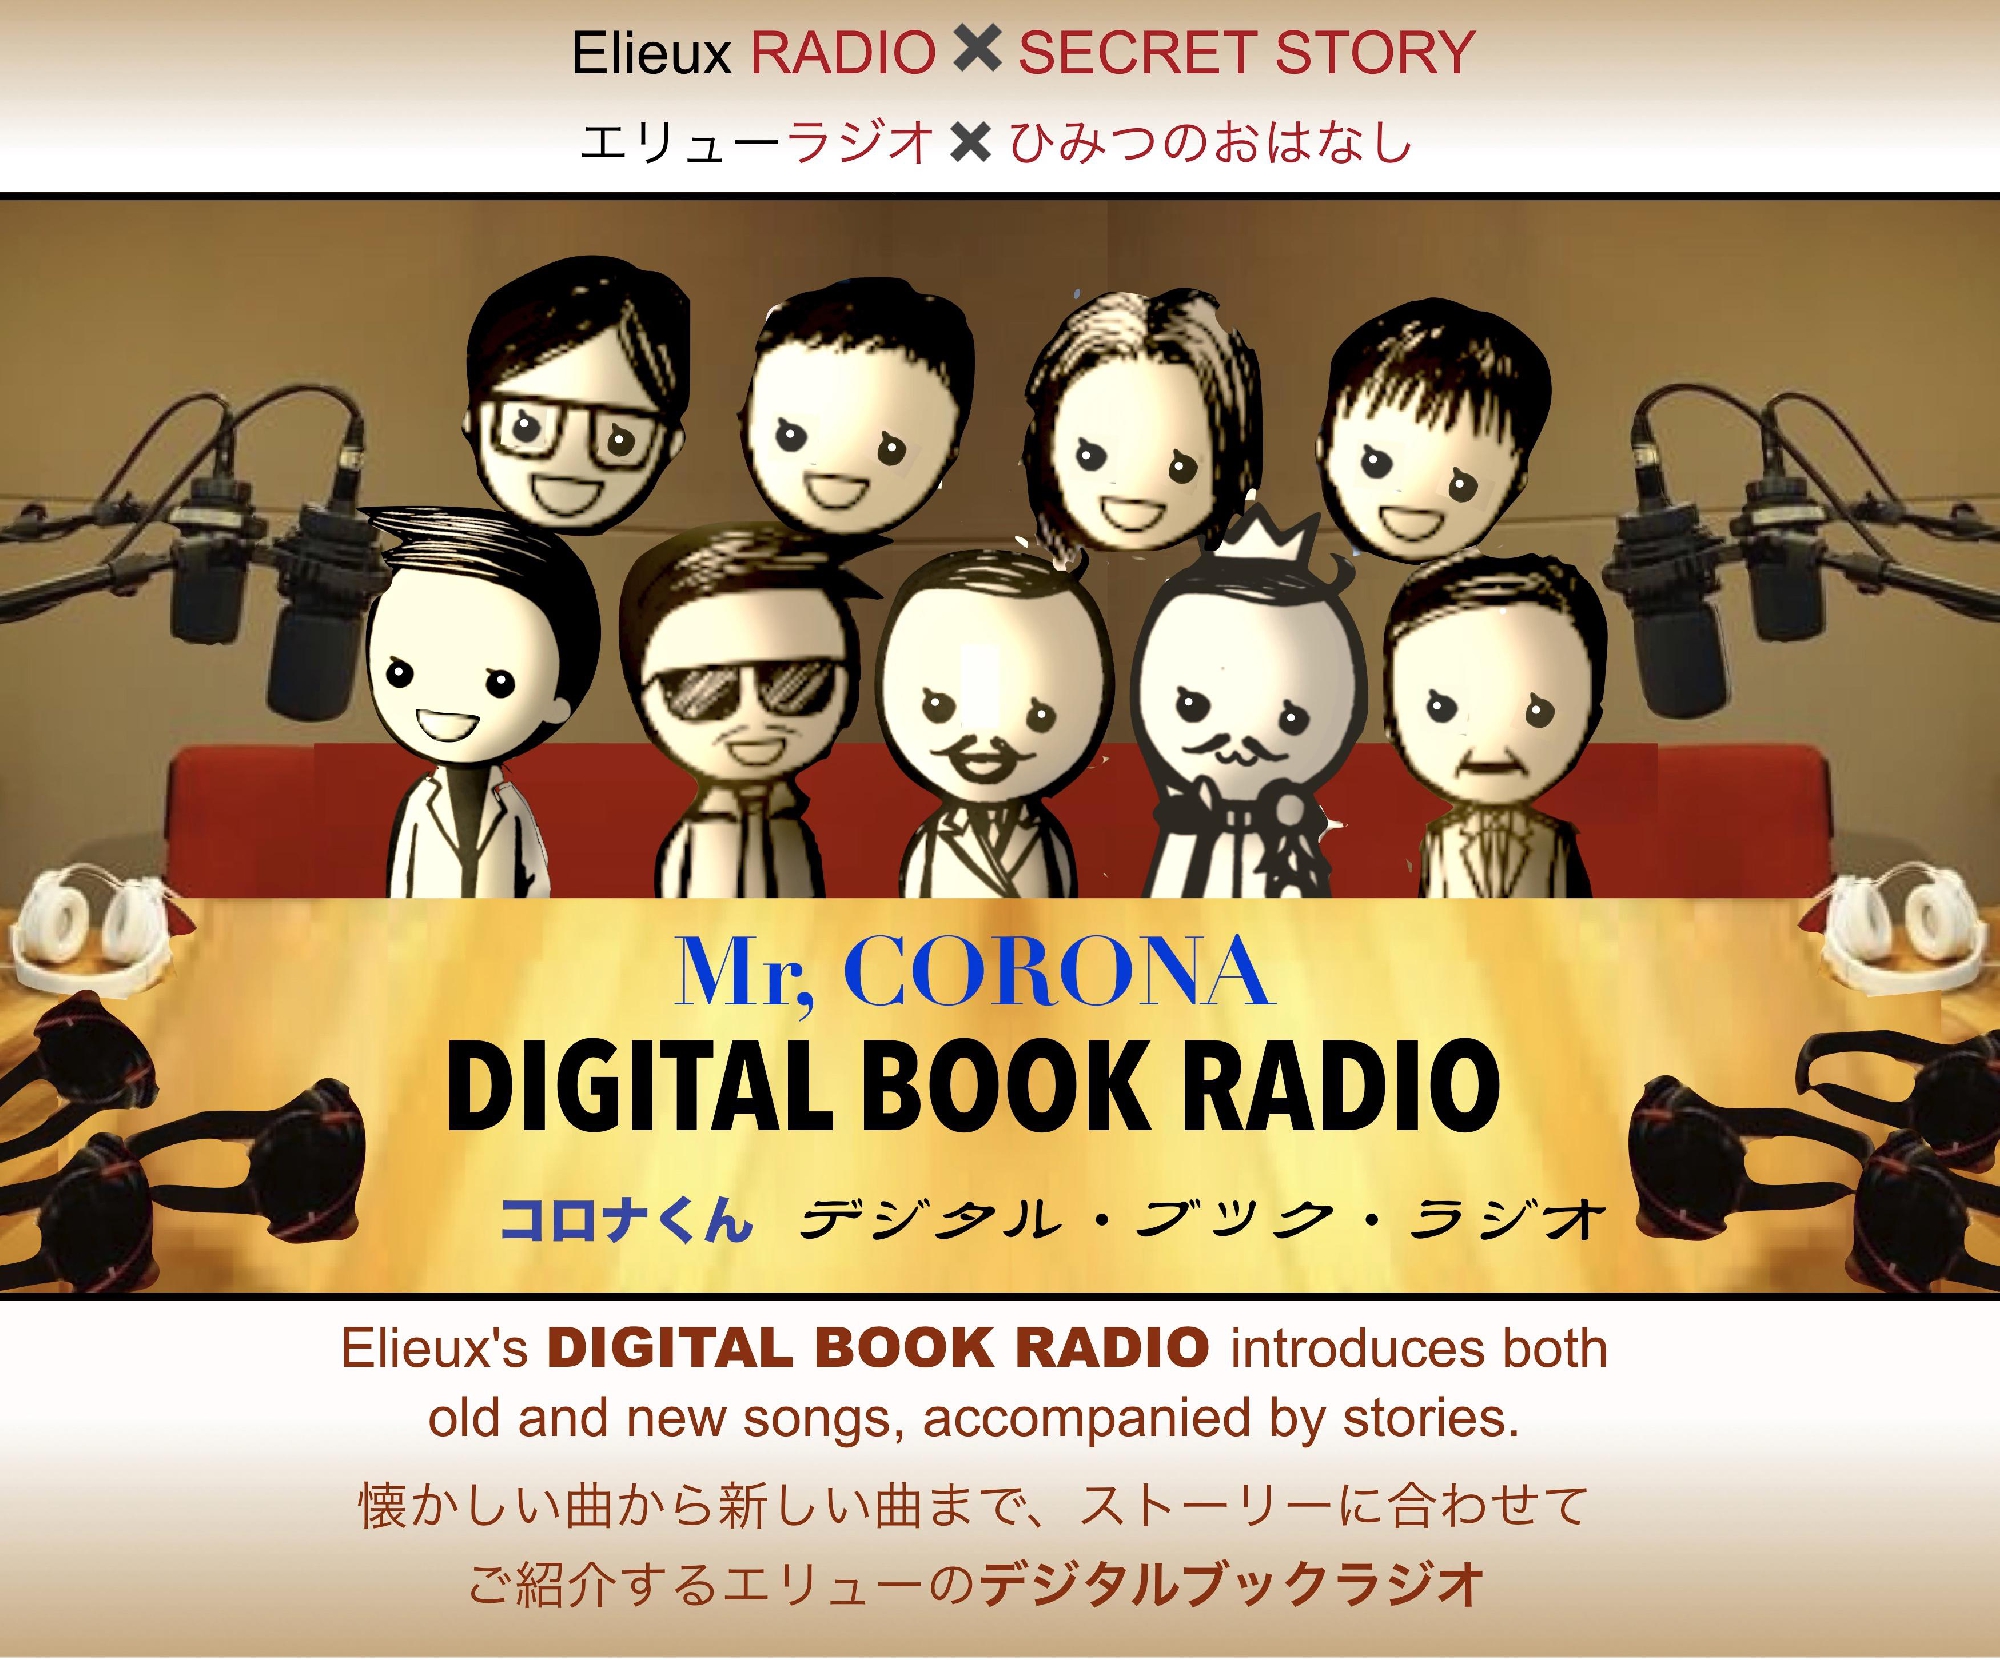 DIGITAL BOOK RADIO 13 "Mr. Corona" 「コロナくん」デジタルブックラジオ 13